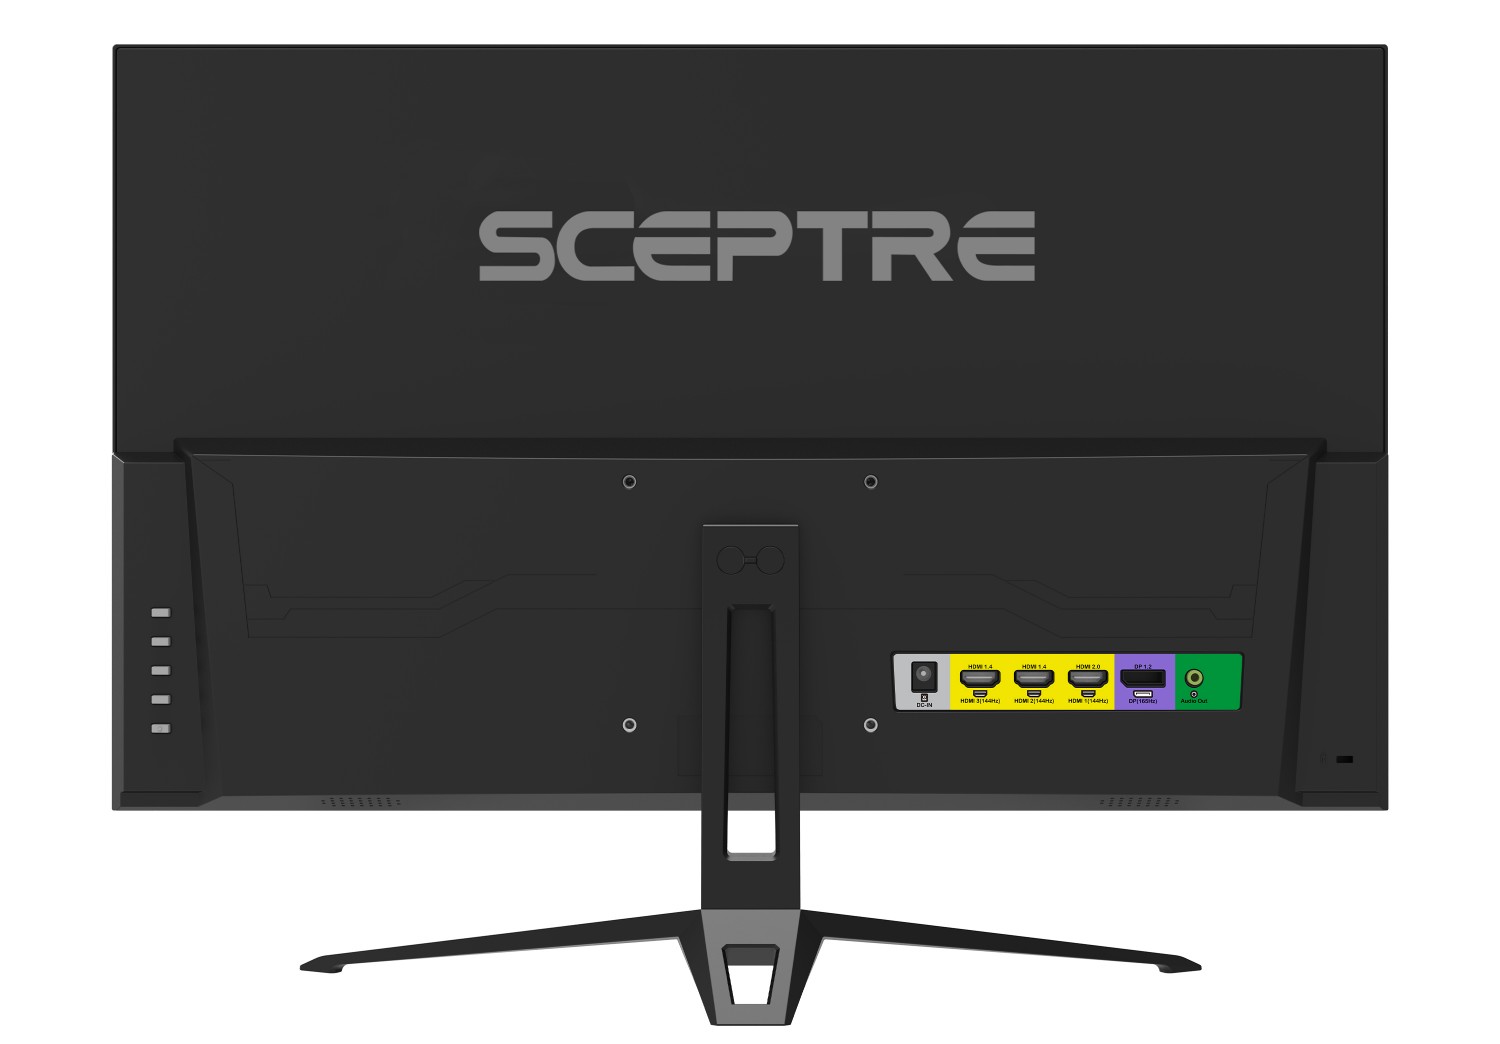 Machine Black 2020 Sceptre IPS 24” Gaming Monitor 165Hz 144Hz Full HD FreeSync Eye Care FPS RTS DisplayPort HDMI Build-in Speakers 1920 x 1080 E248B-FPT168 